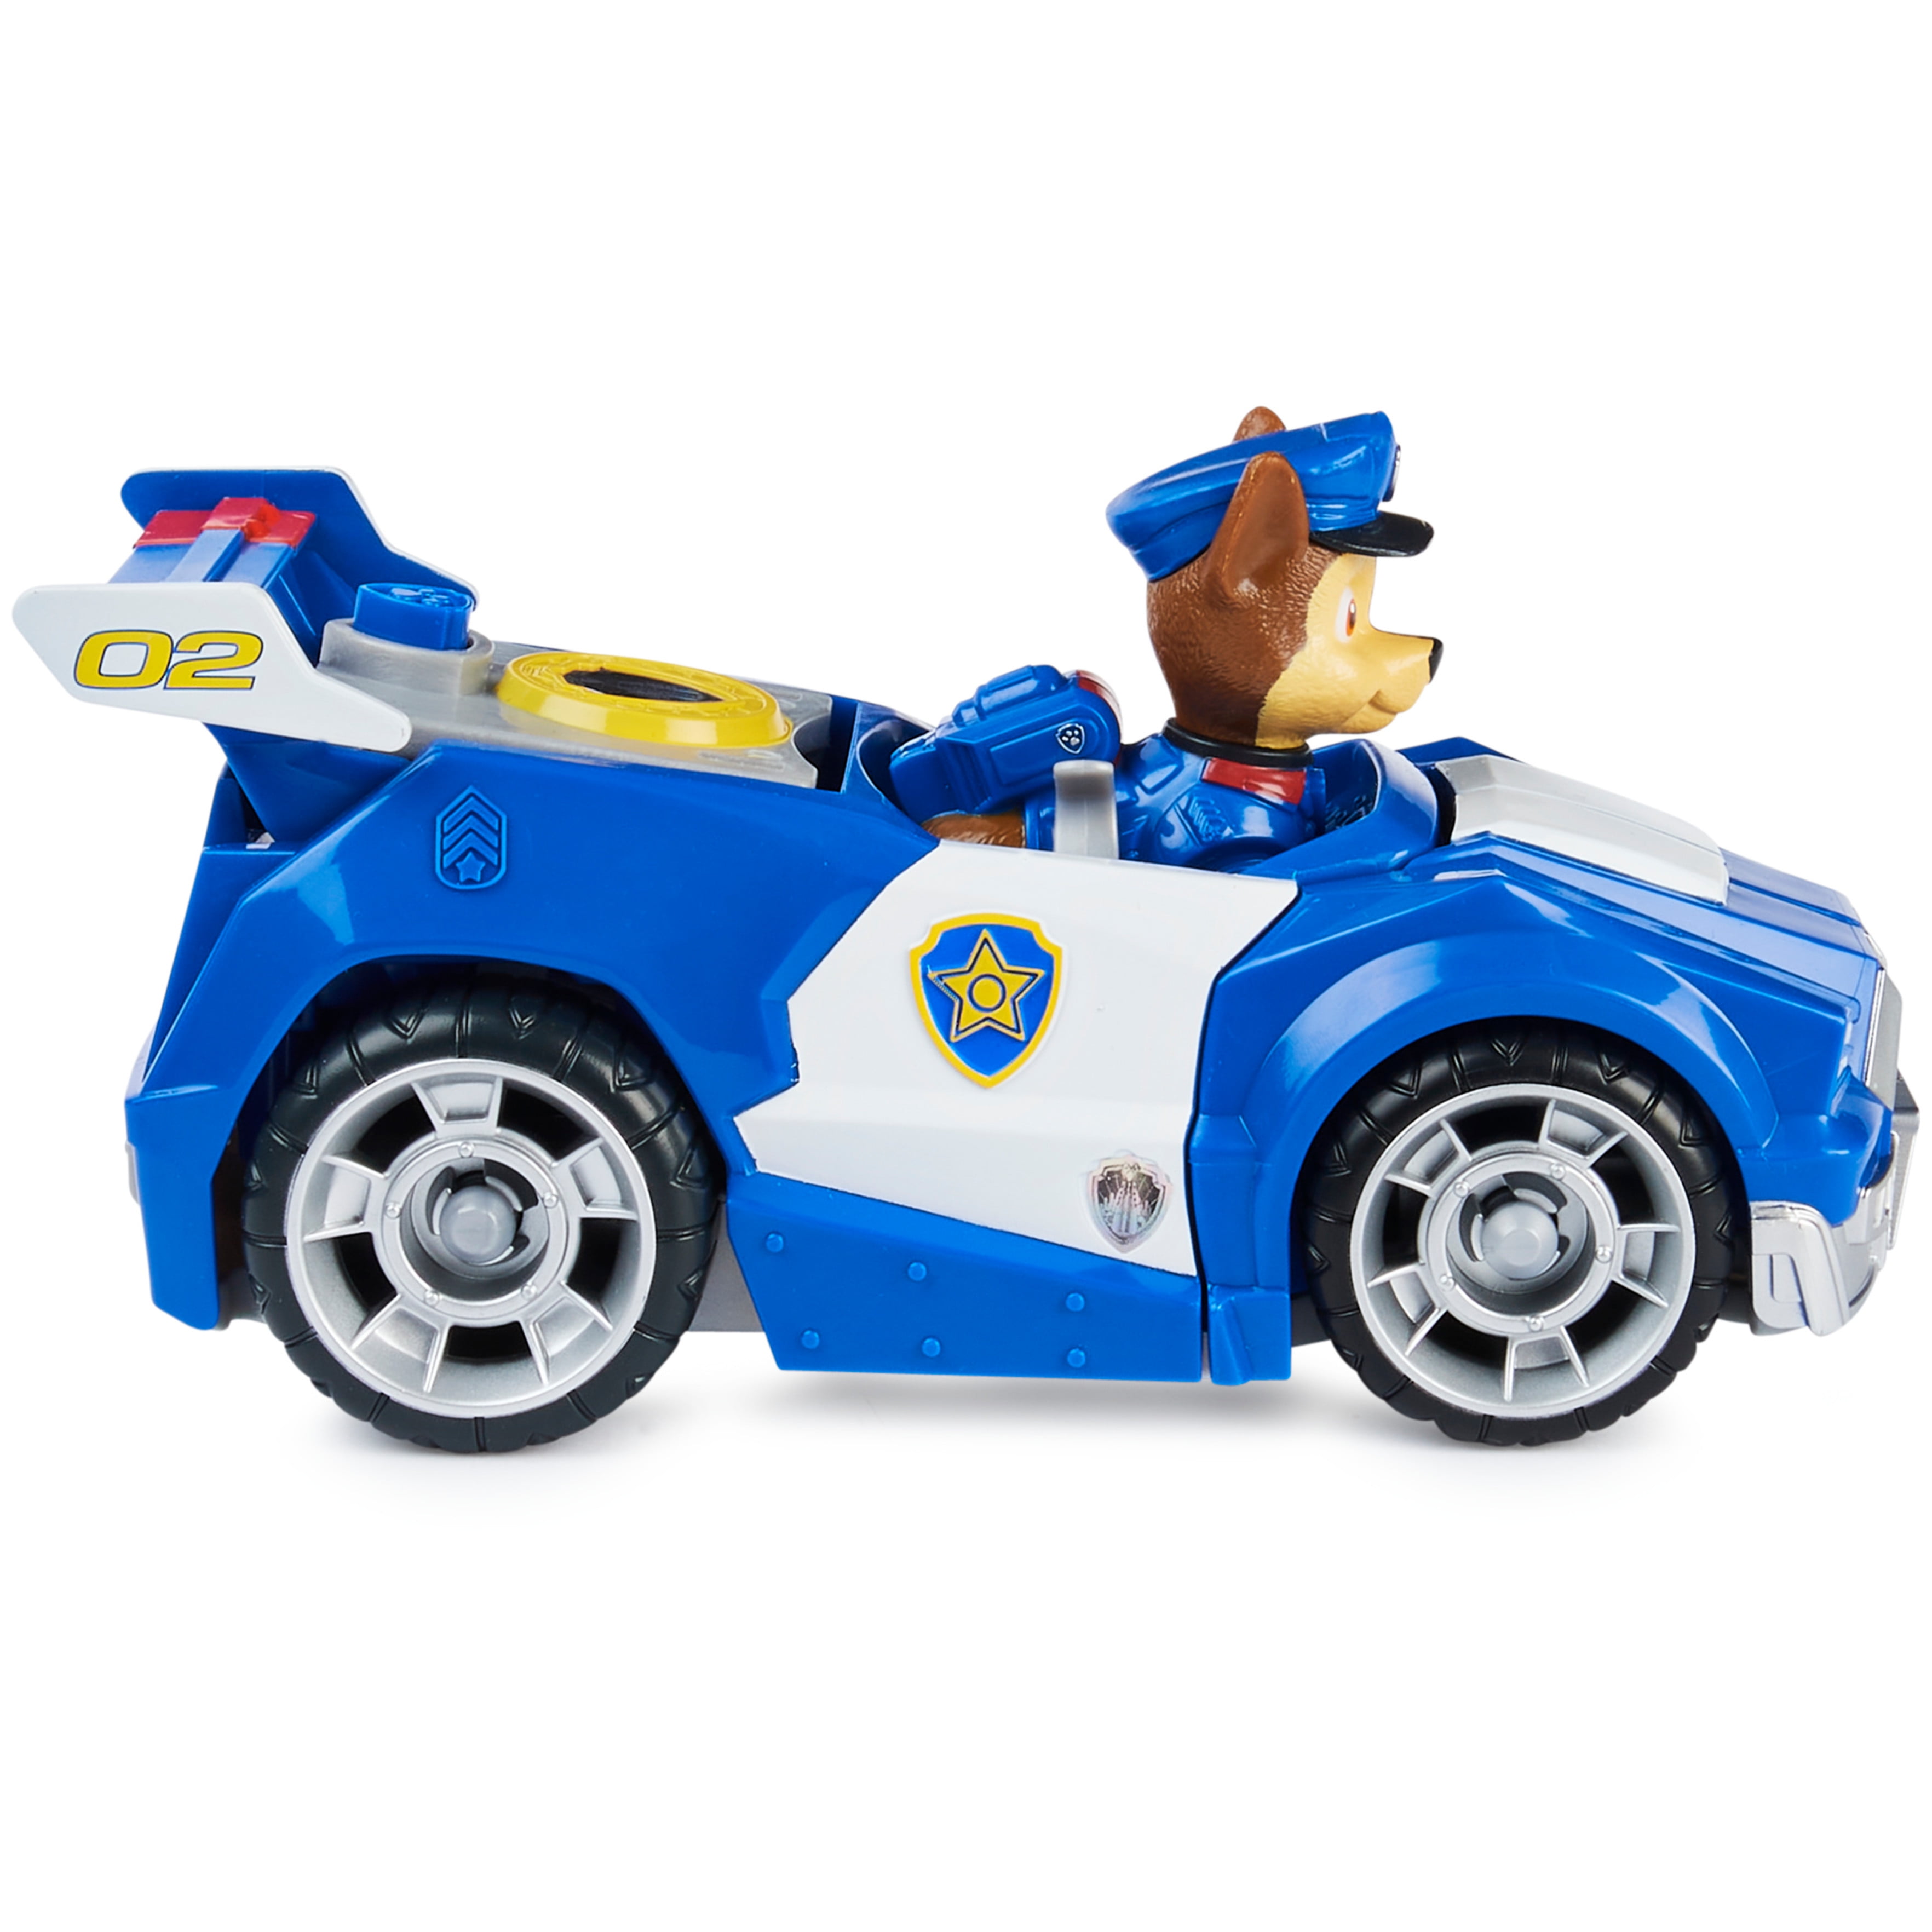 Paw Patrol Chase Mini Movie Vehicle Set 2 In 1 Car & Motorcycle